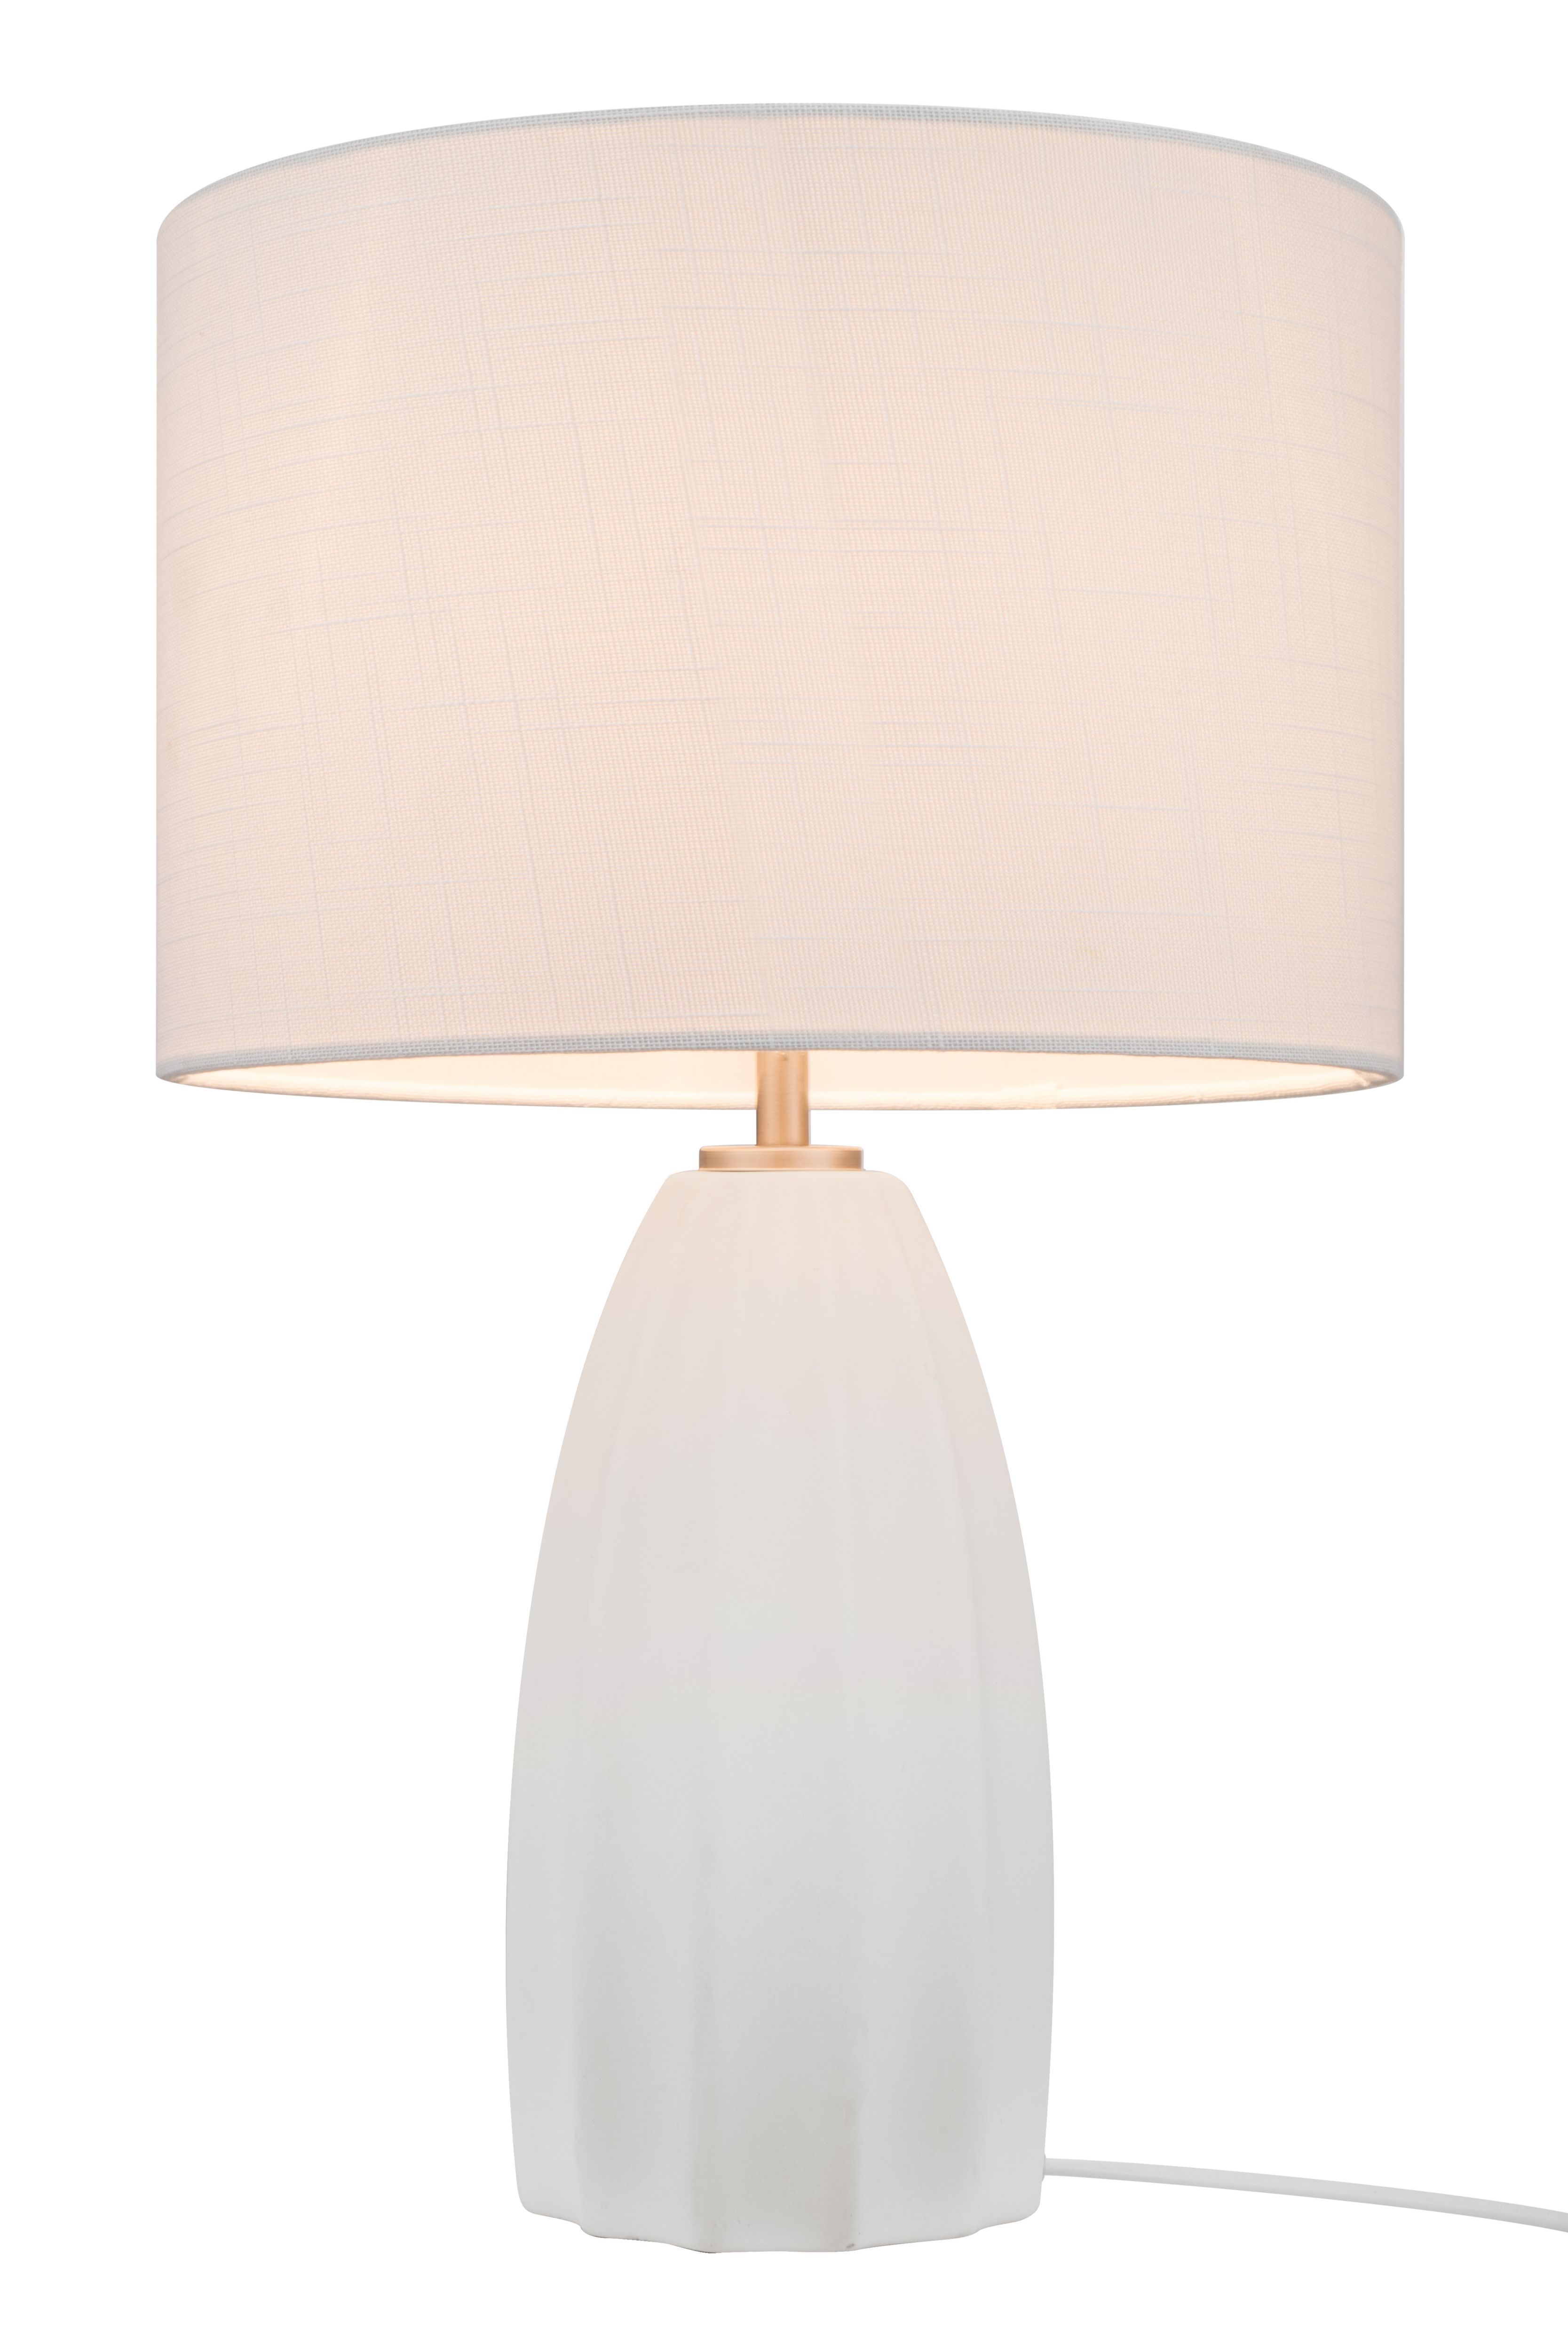 GoodHome Lytham Cream Straight Table lamp